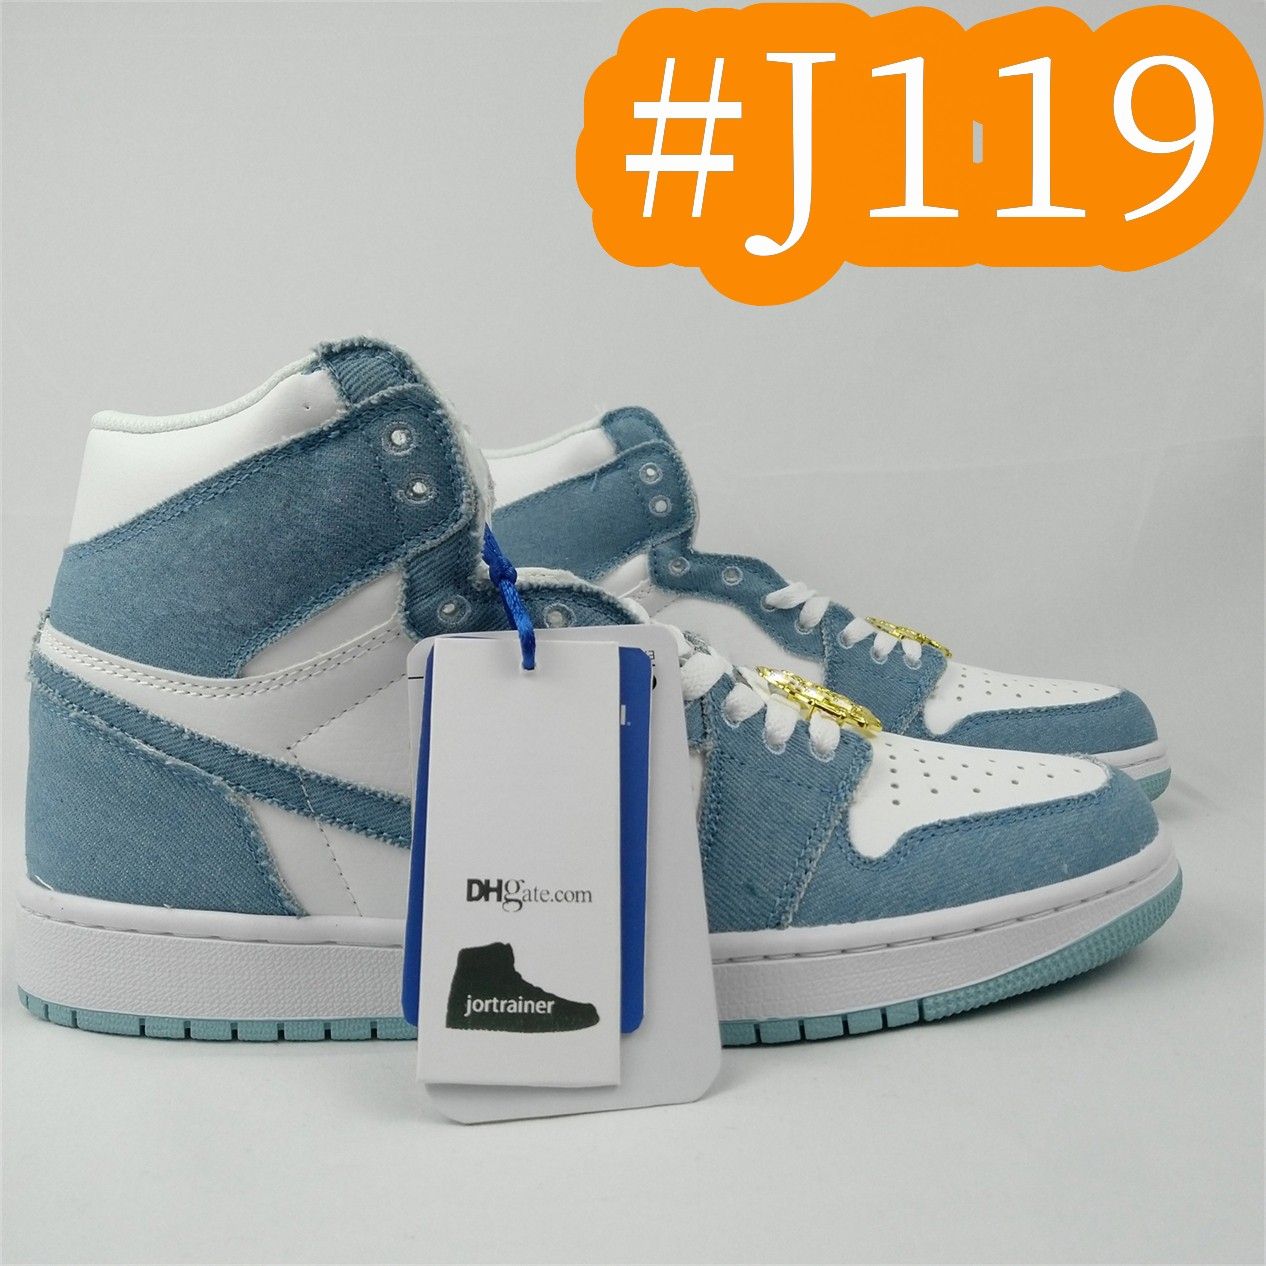 # J119